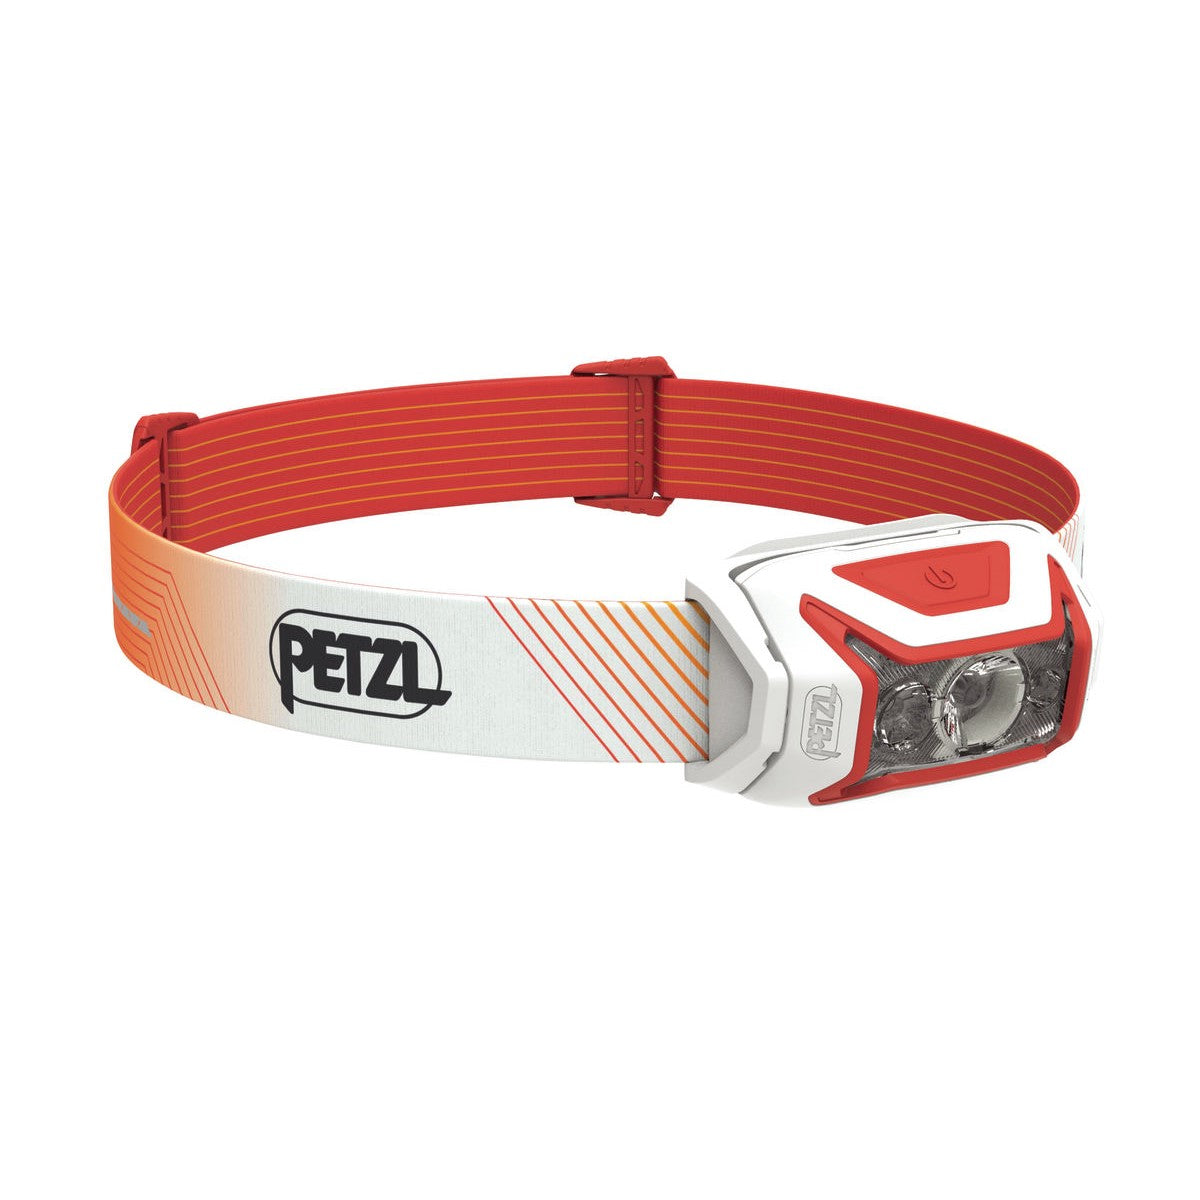 PETZL Tikka Headlamp - Compact 350 Lumen Light with Red Lighting, for  Hiking, Climbing, Running, and Camping - Blue